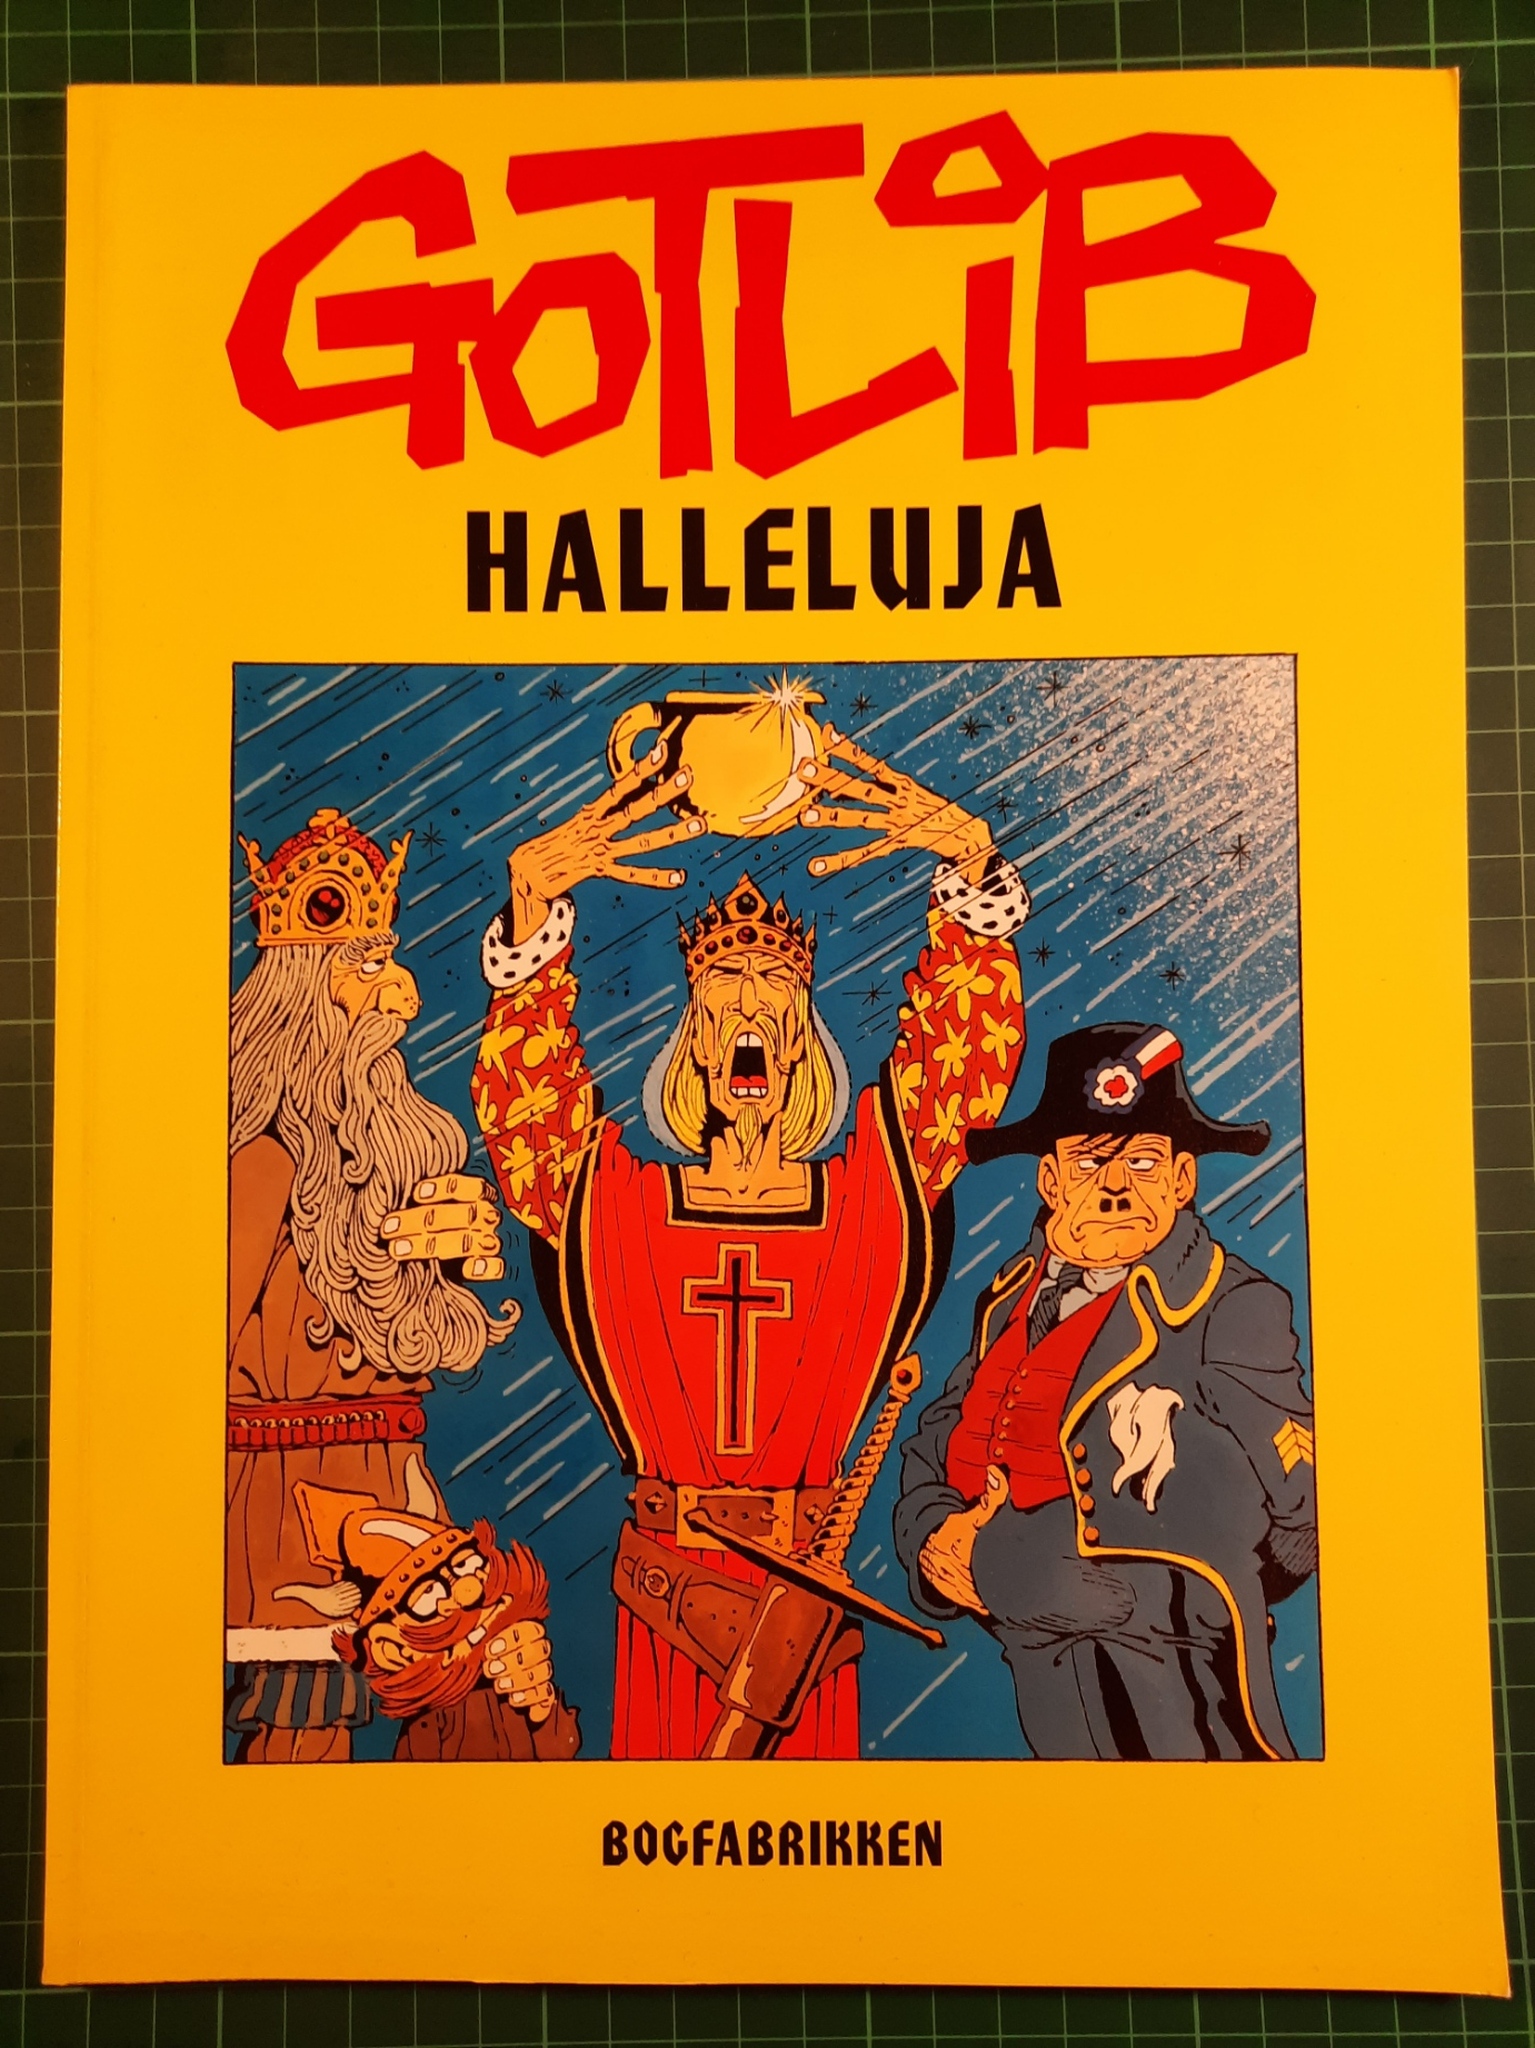 Gotlib Halleluja (Dansk)